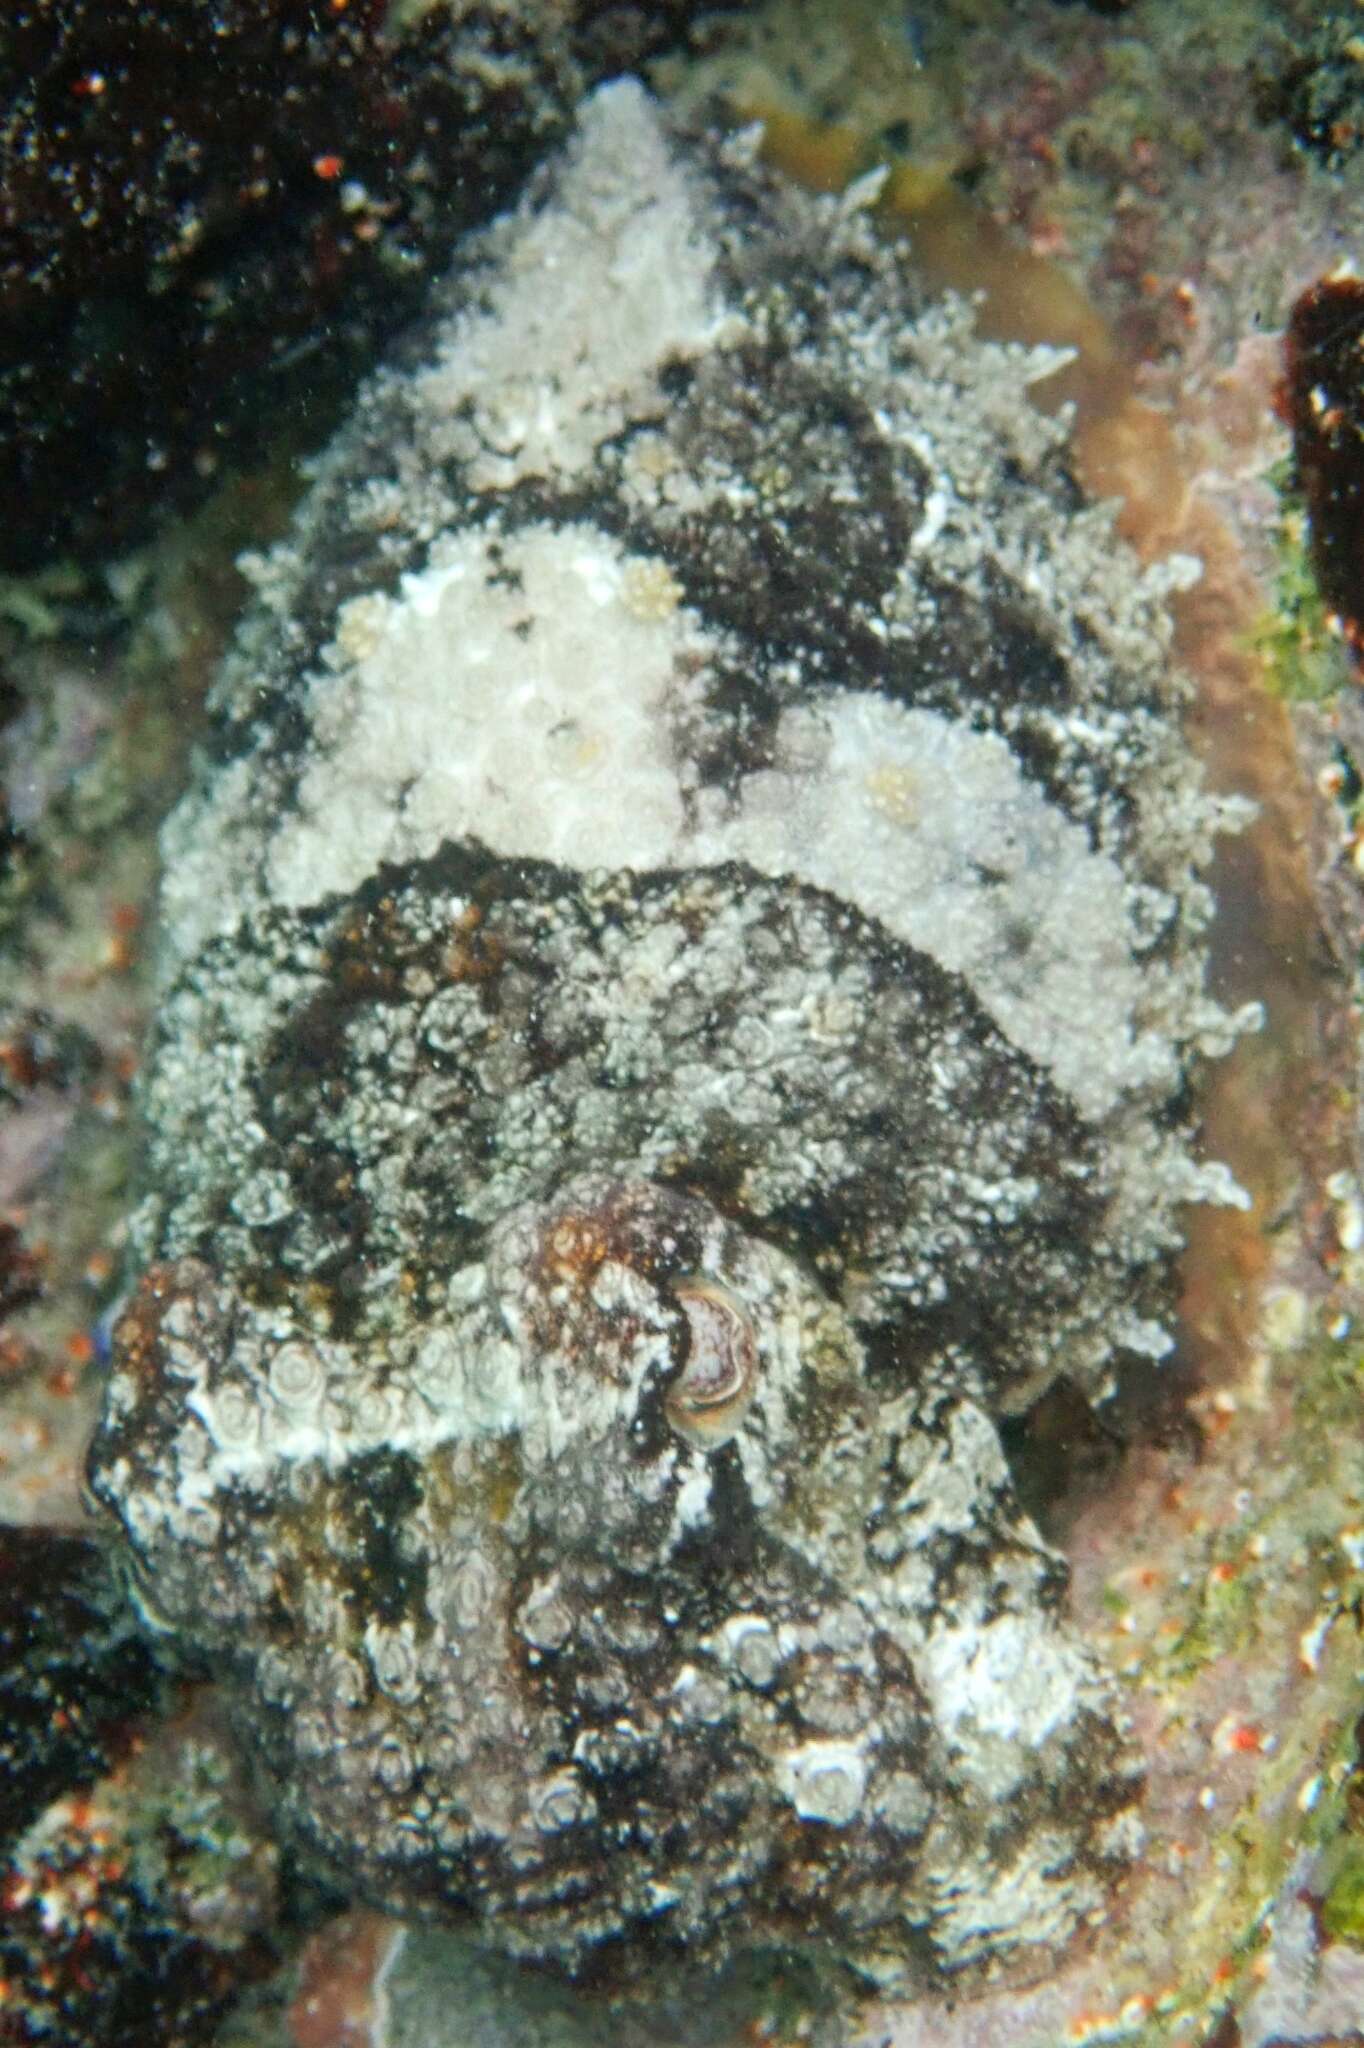 Image of tuberculate cuttlefish